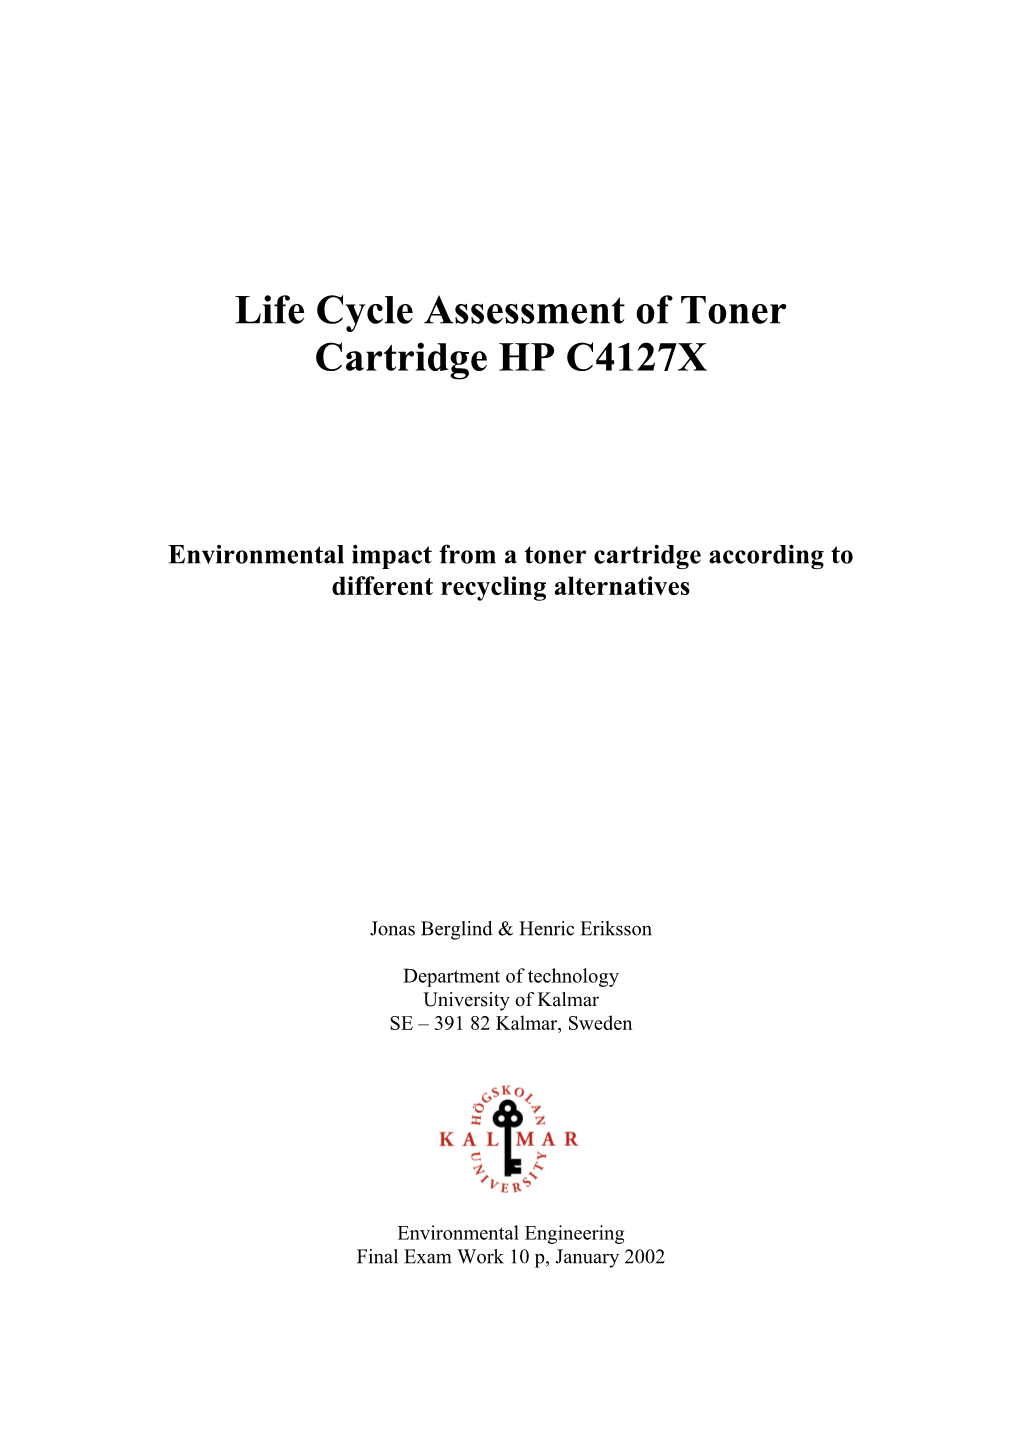 Life Cycle Assessment of Toner Cartridge HP C4127X